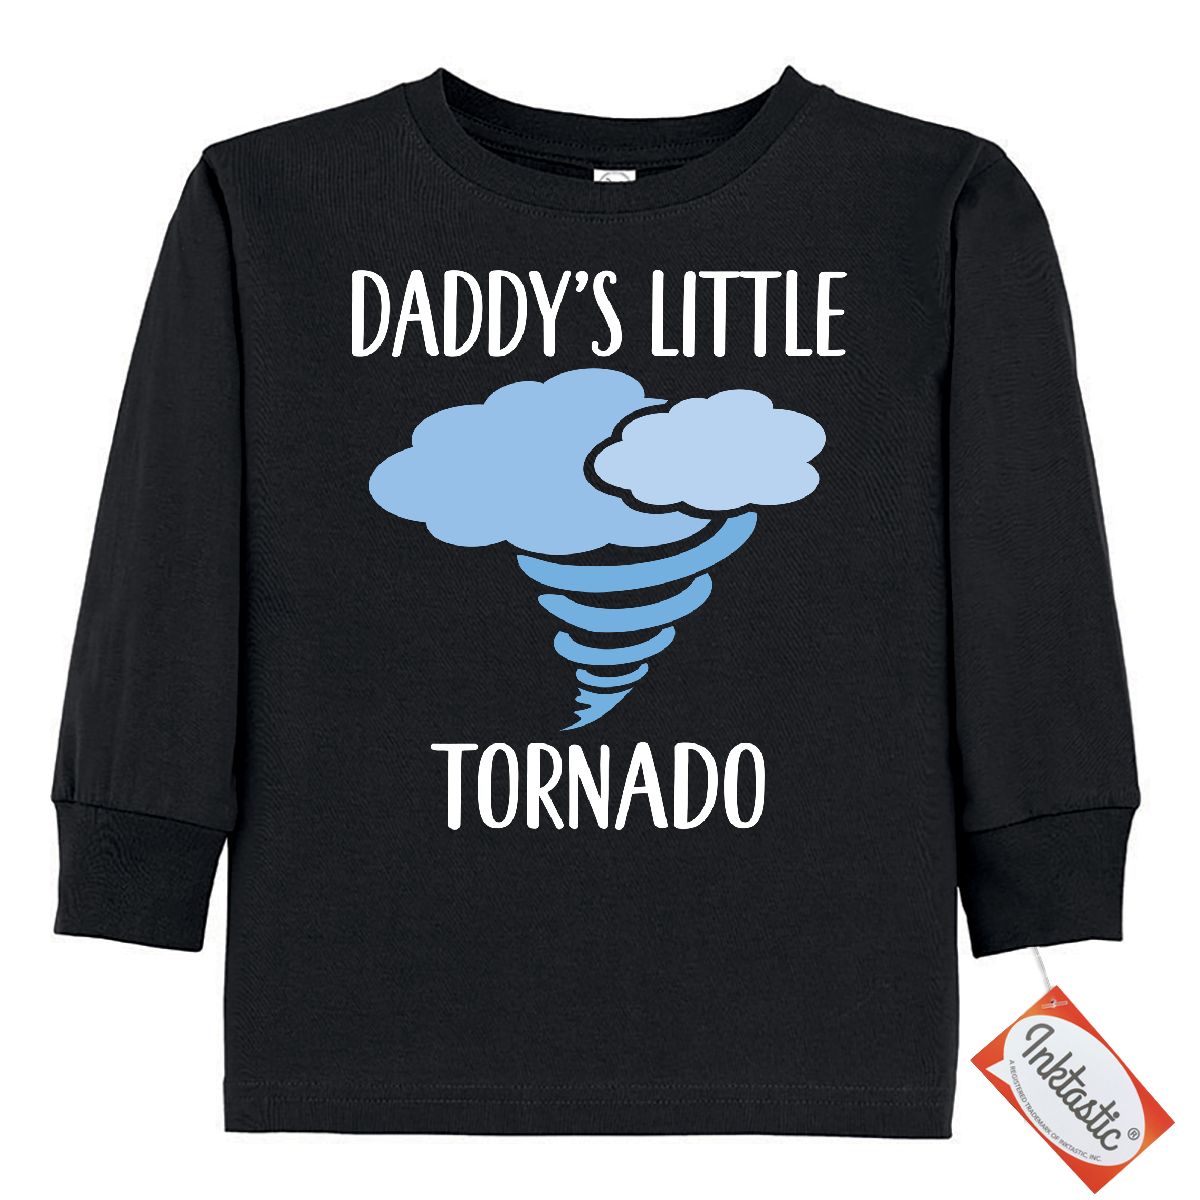 Inktastic Daddy's Little Tornado Toddler Long Sleeve T-Shirt Boys Baby Boy Kids